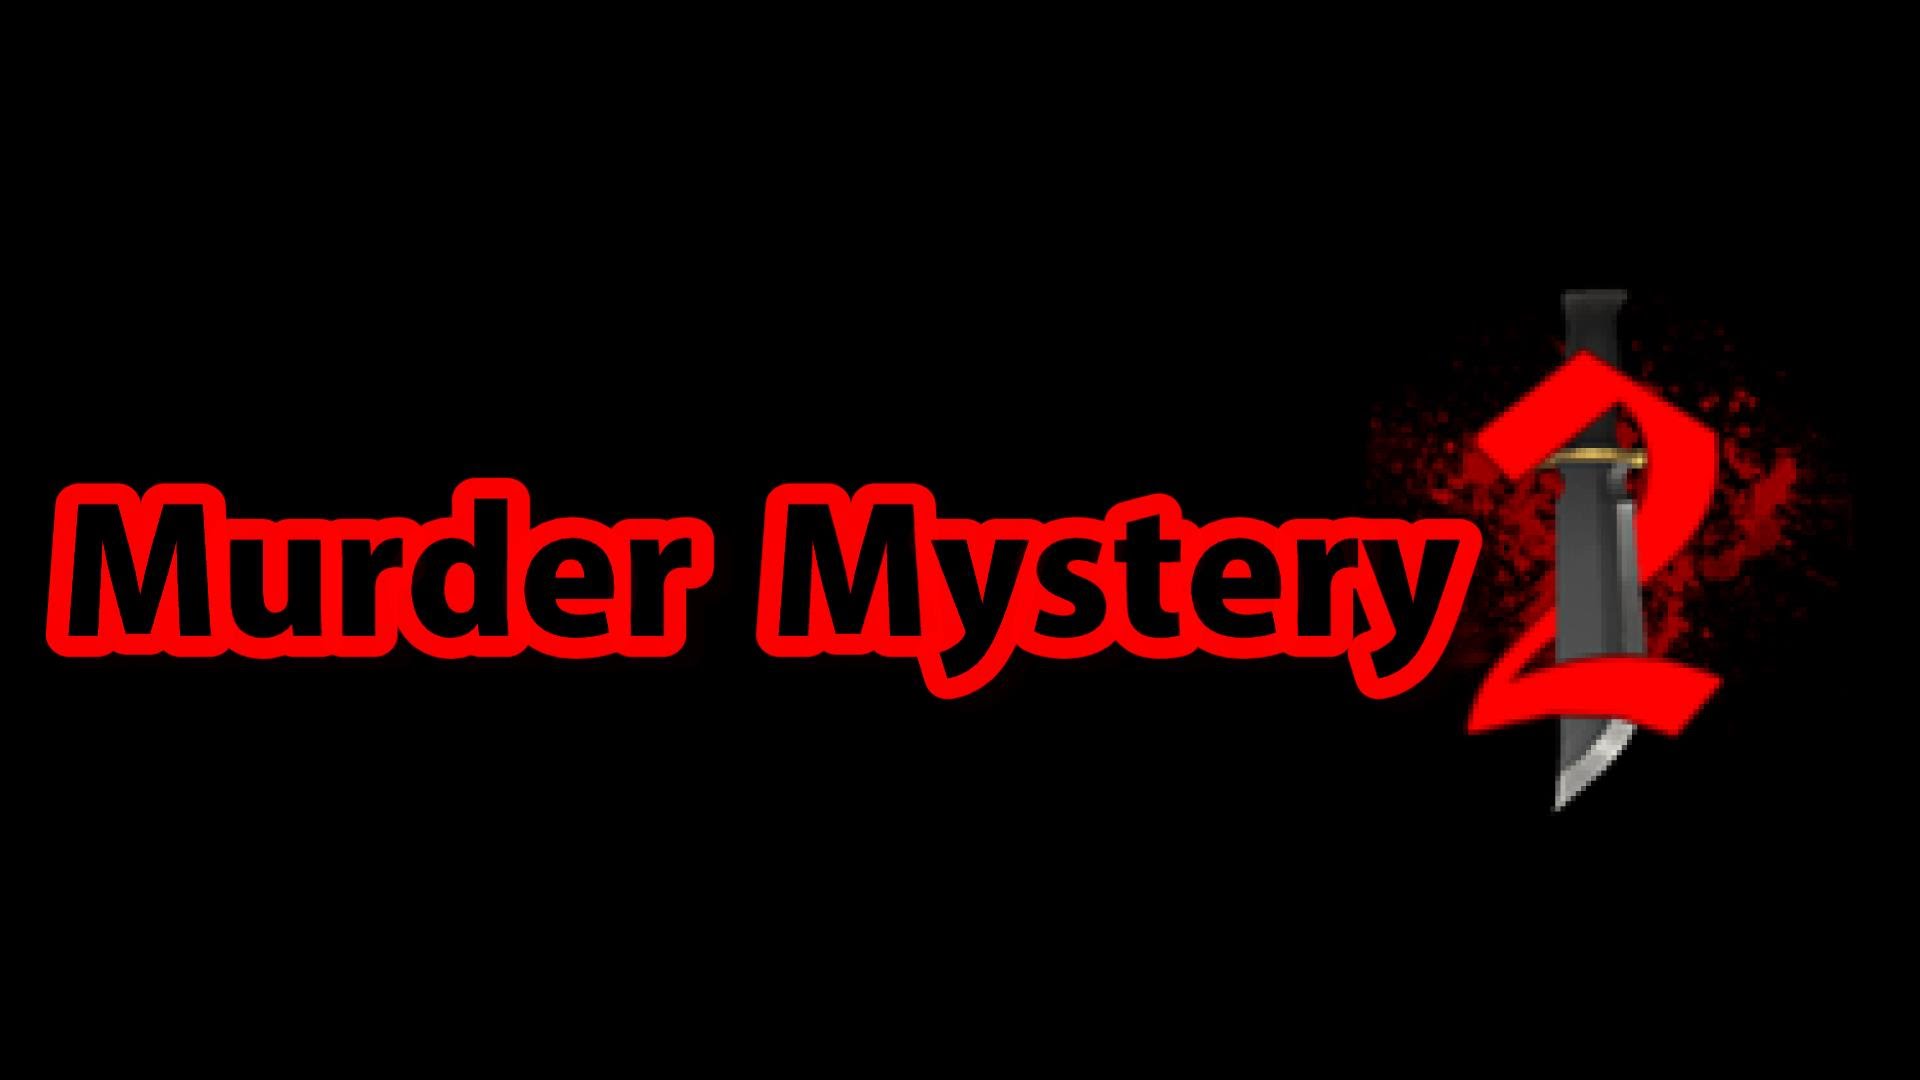 I love mm2 роблокс. Murder Mystery РОБЛОКС. Murder Mystery 2. РОБЛОКС Murder Mystery 2. Murder Mystery 2 Roblox.